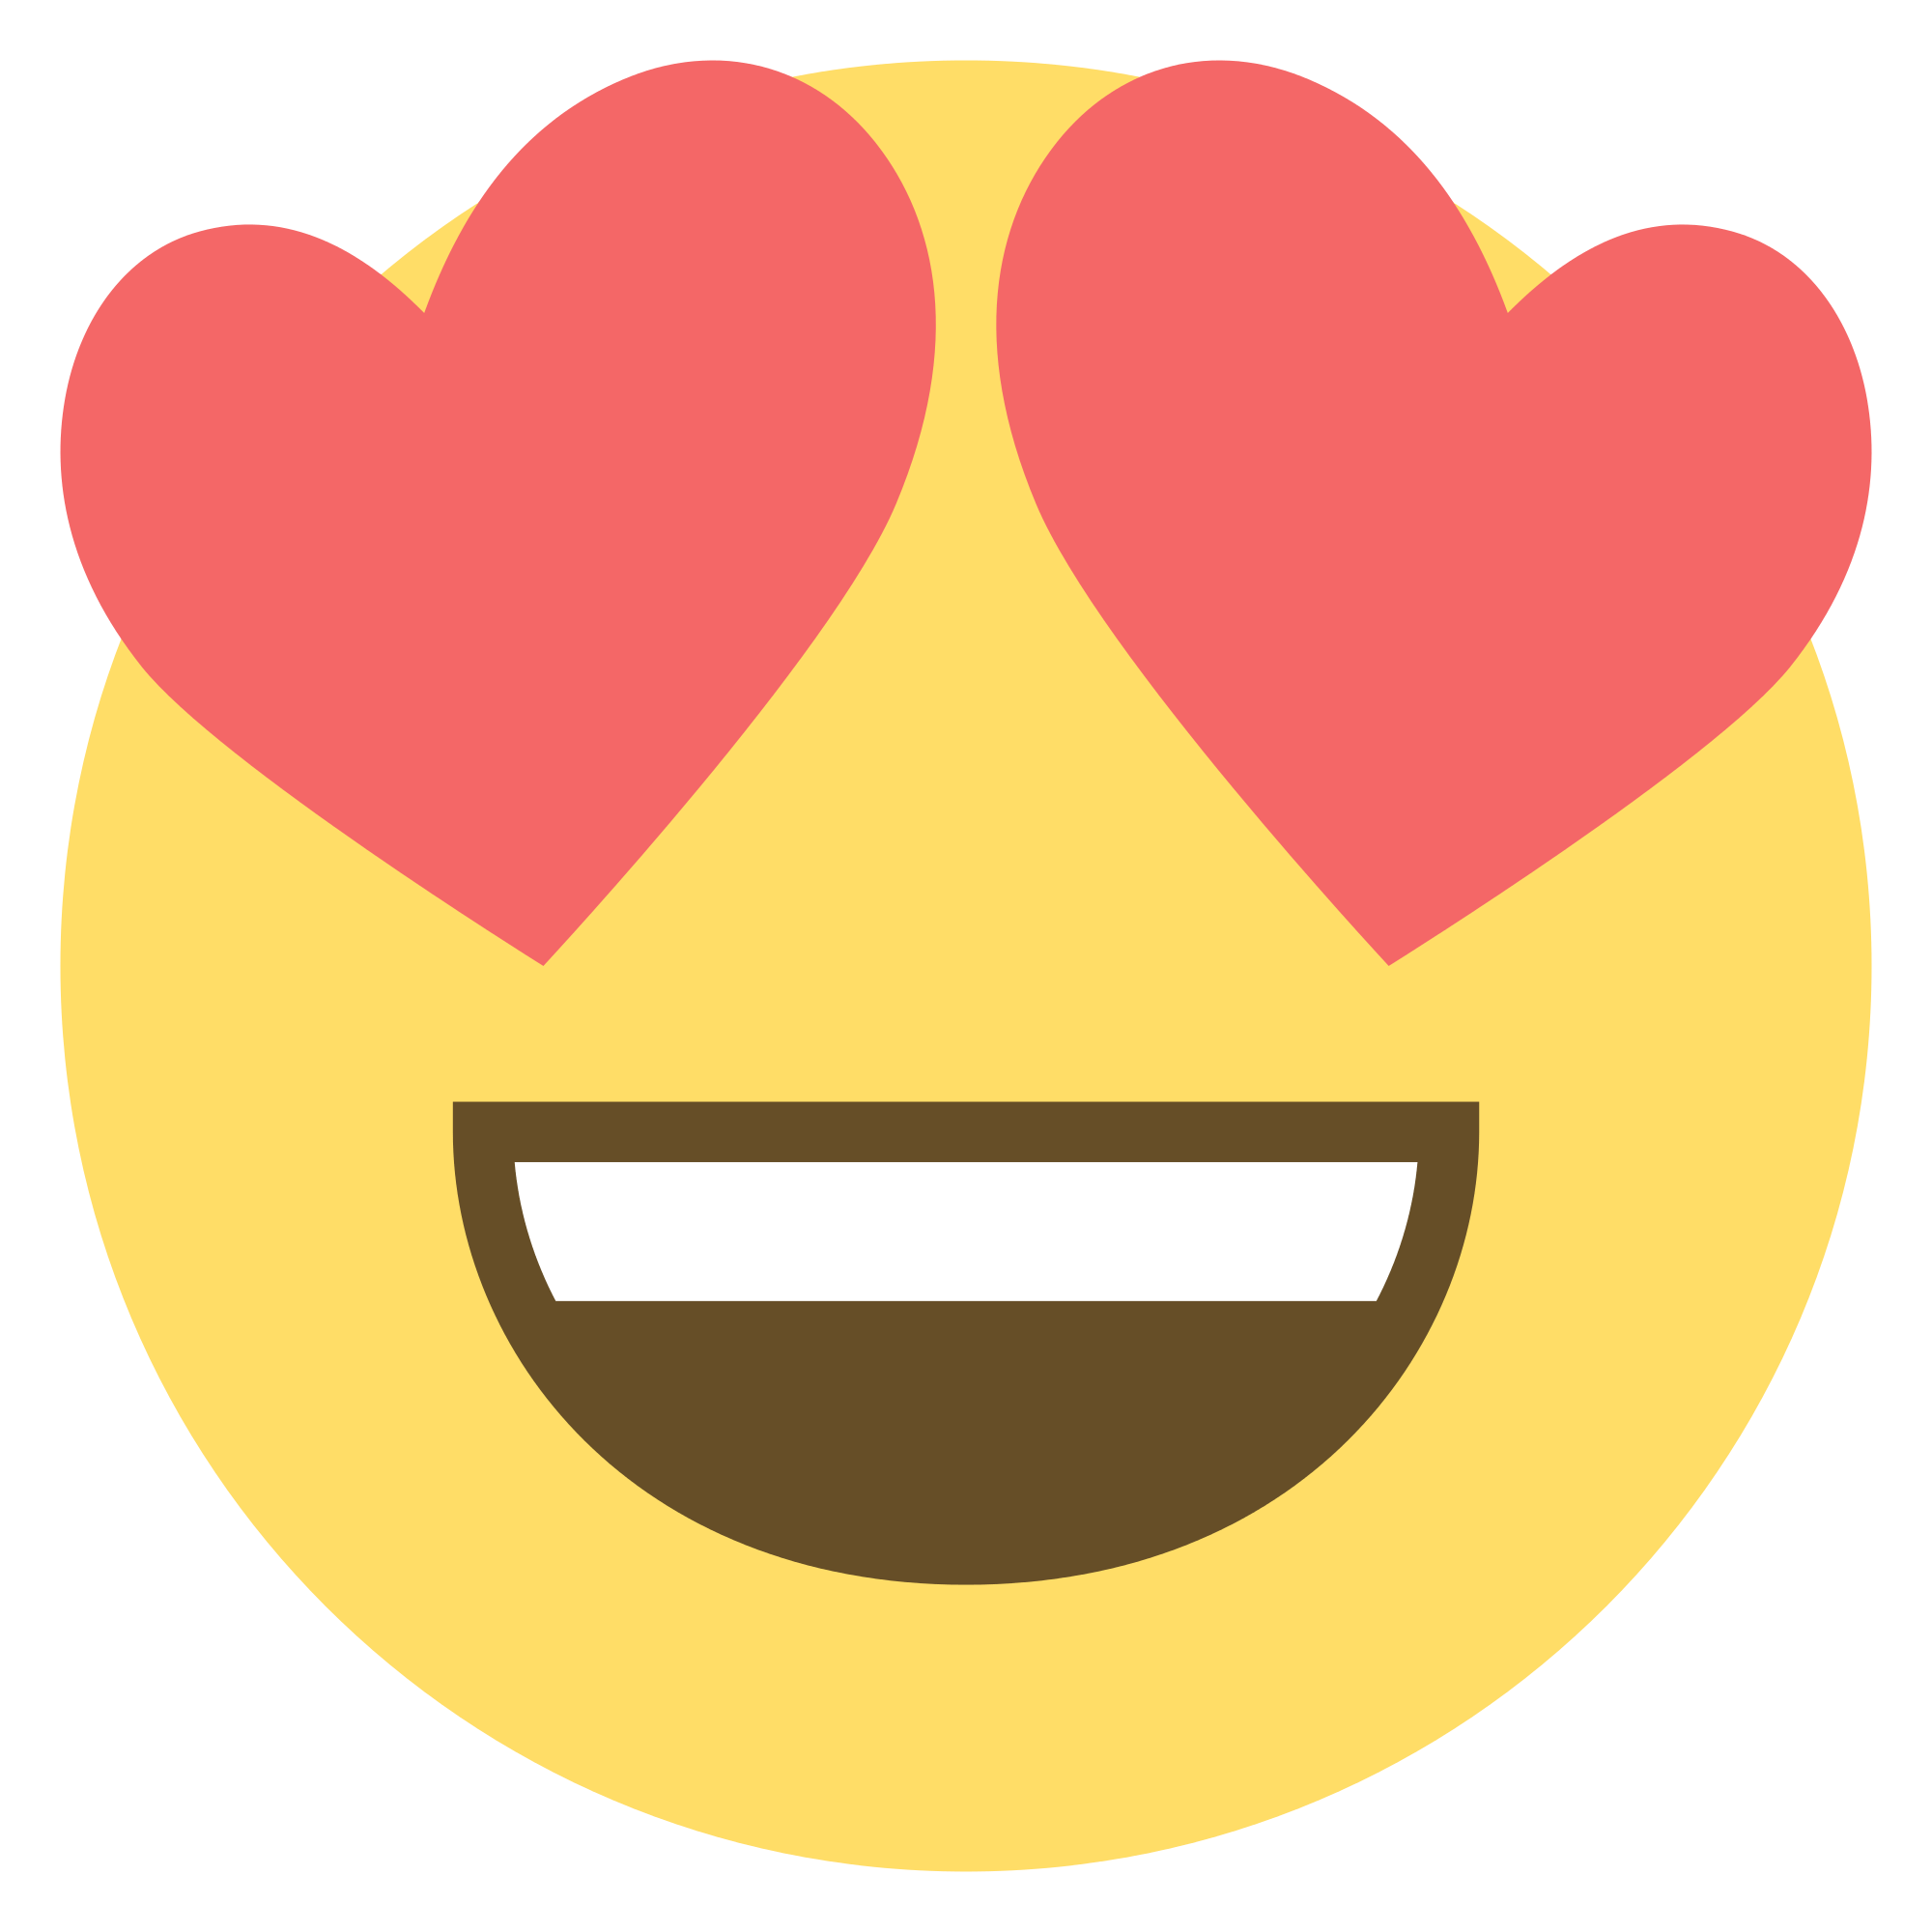 Love Emoji PNG HD Quality